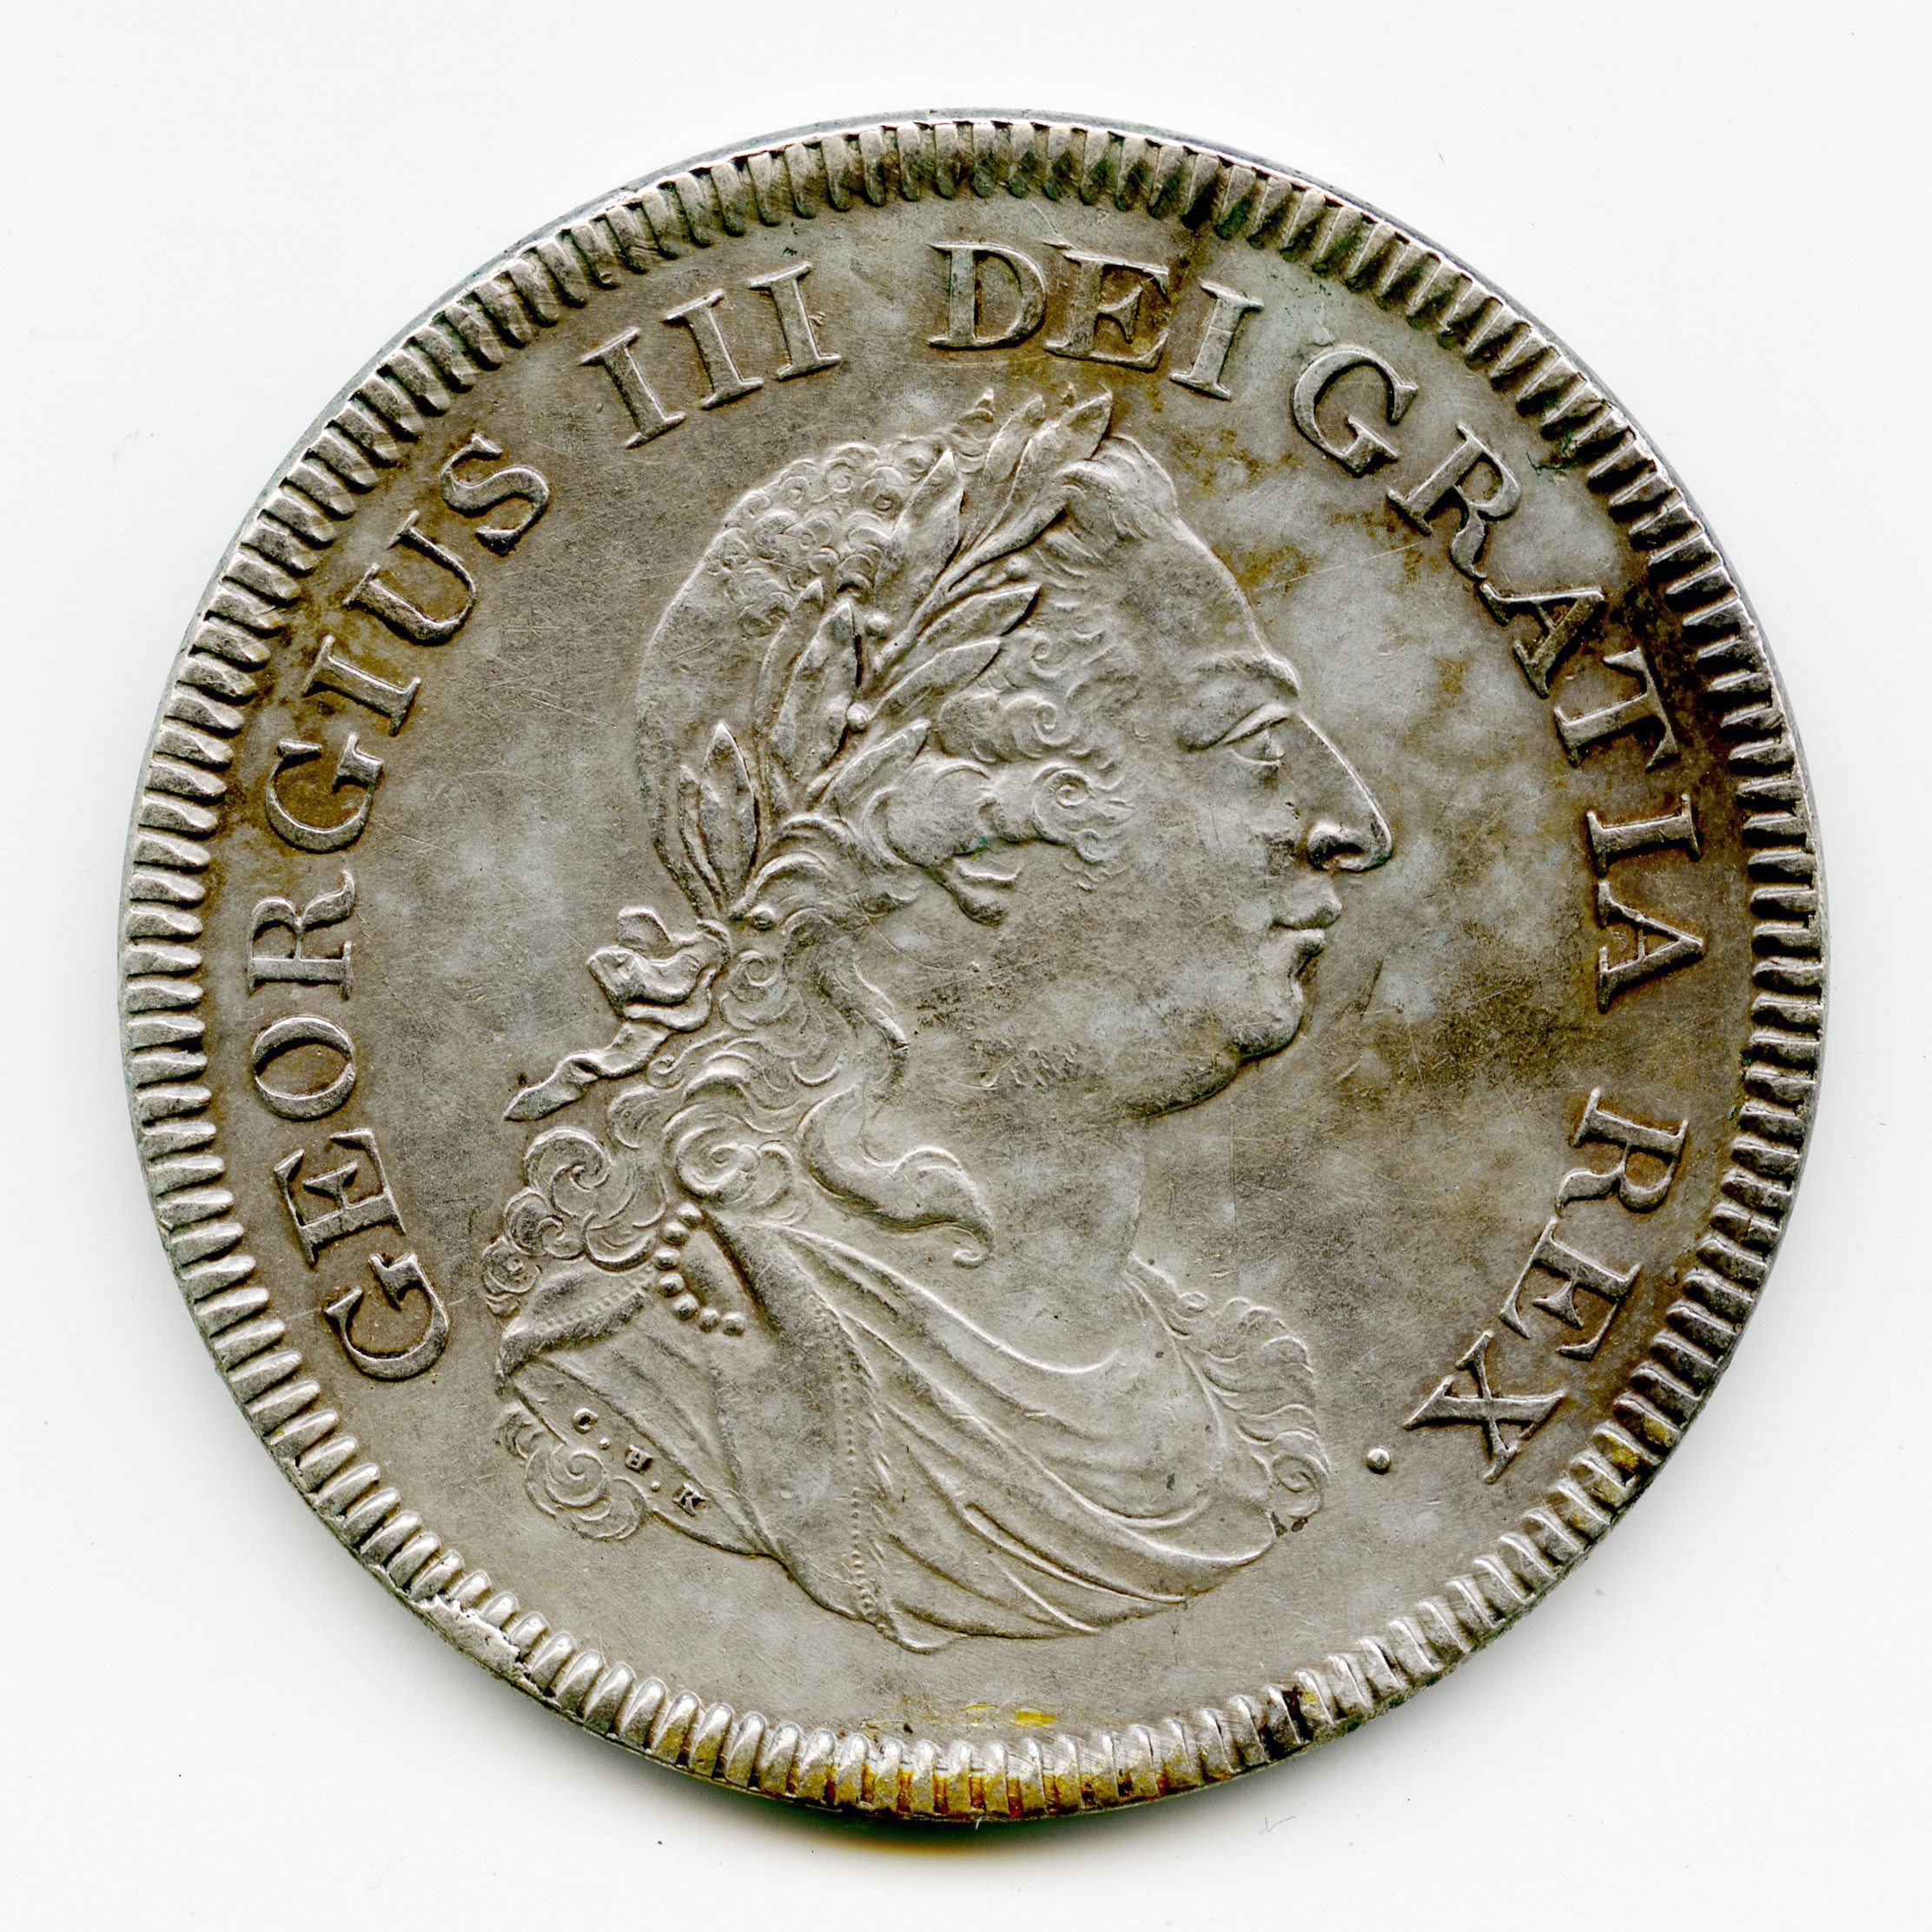 Grande-Bretagne - 1 Dollar - 1804 avers